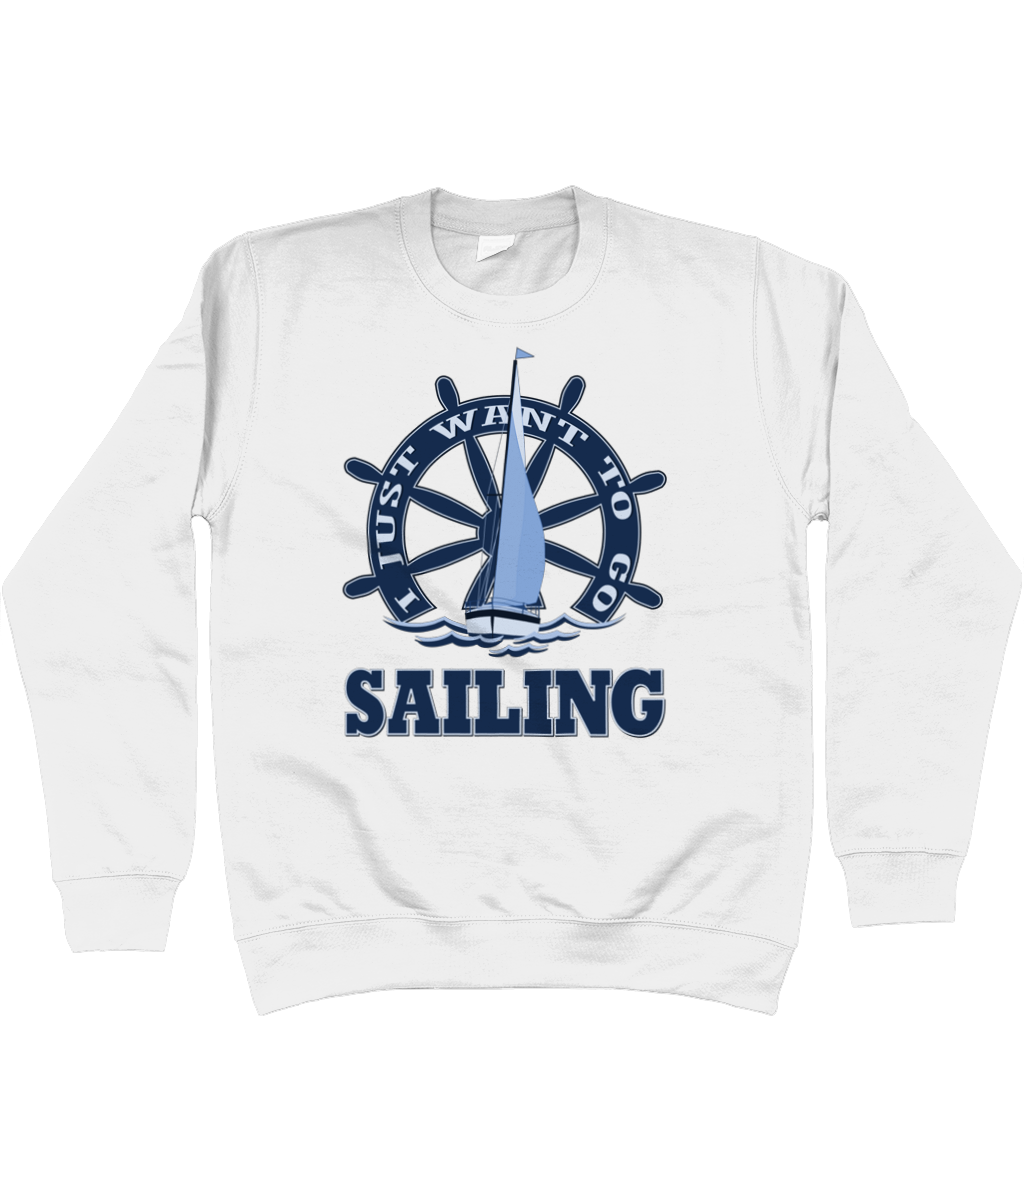 I Just Want to Go Sailing Sweatshirt Arctic White